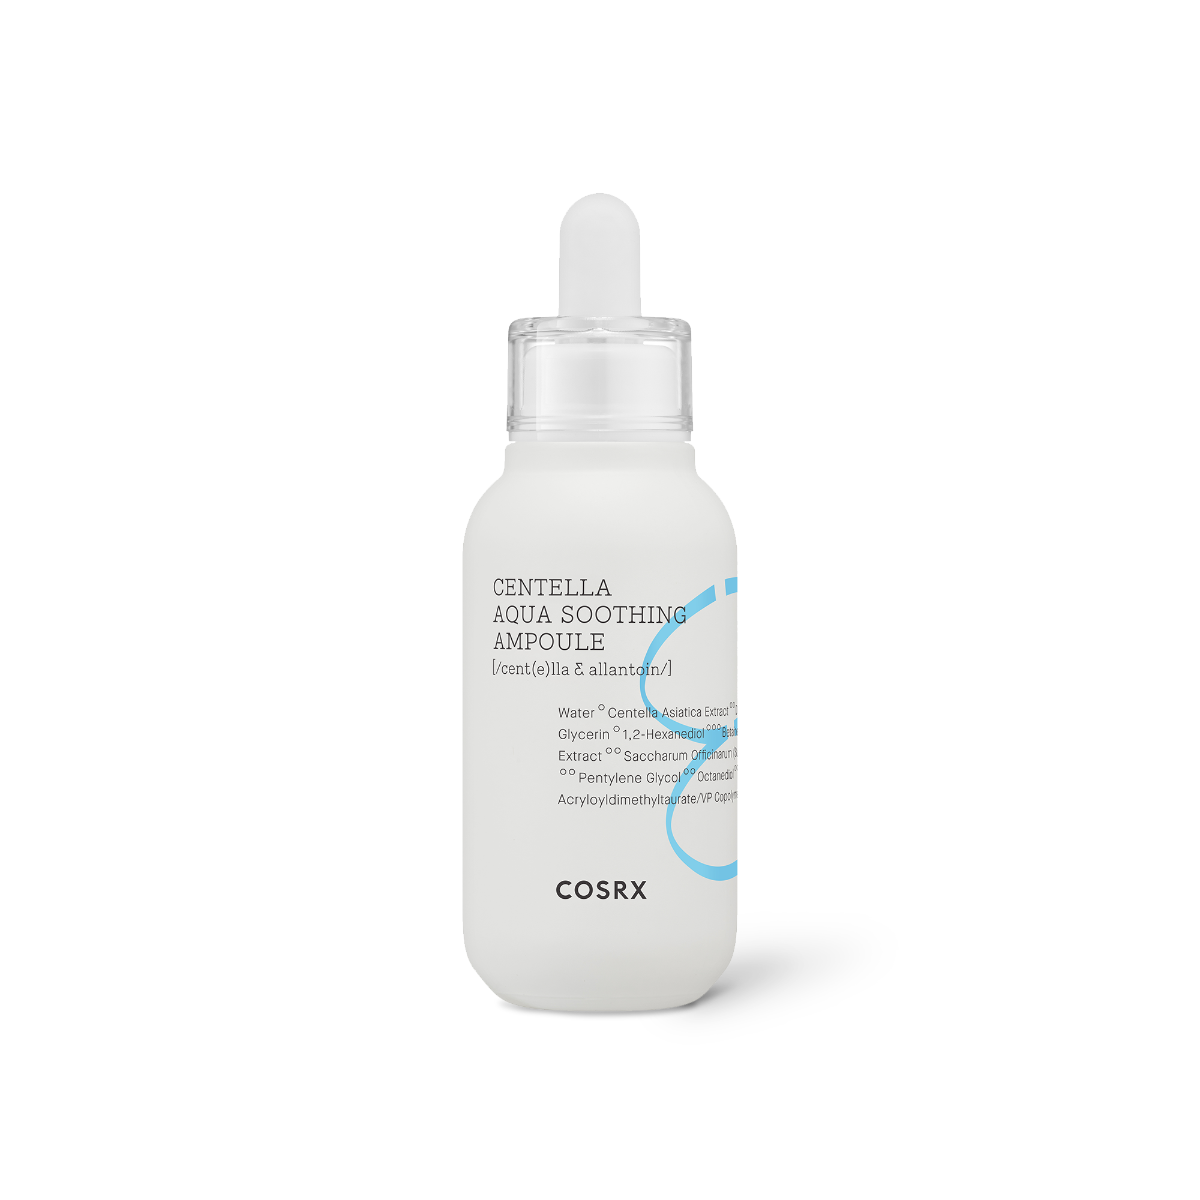 COSRX Hydrium Centella Aqua Beruhigende Ampulle 40 ml /1,35 fl.oz